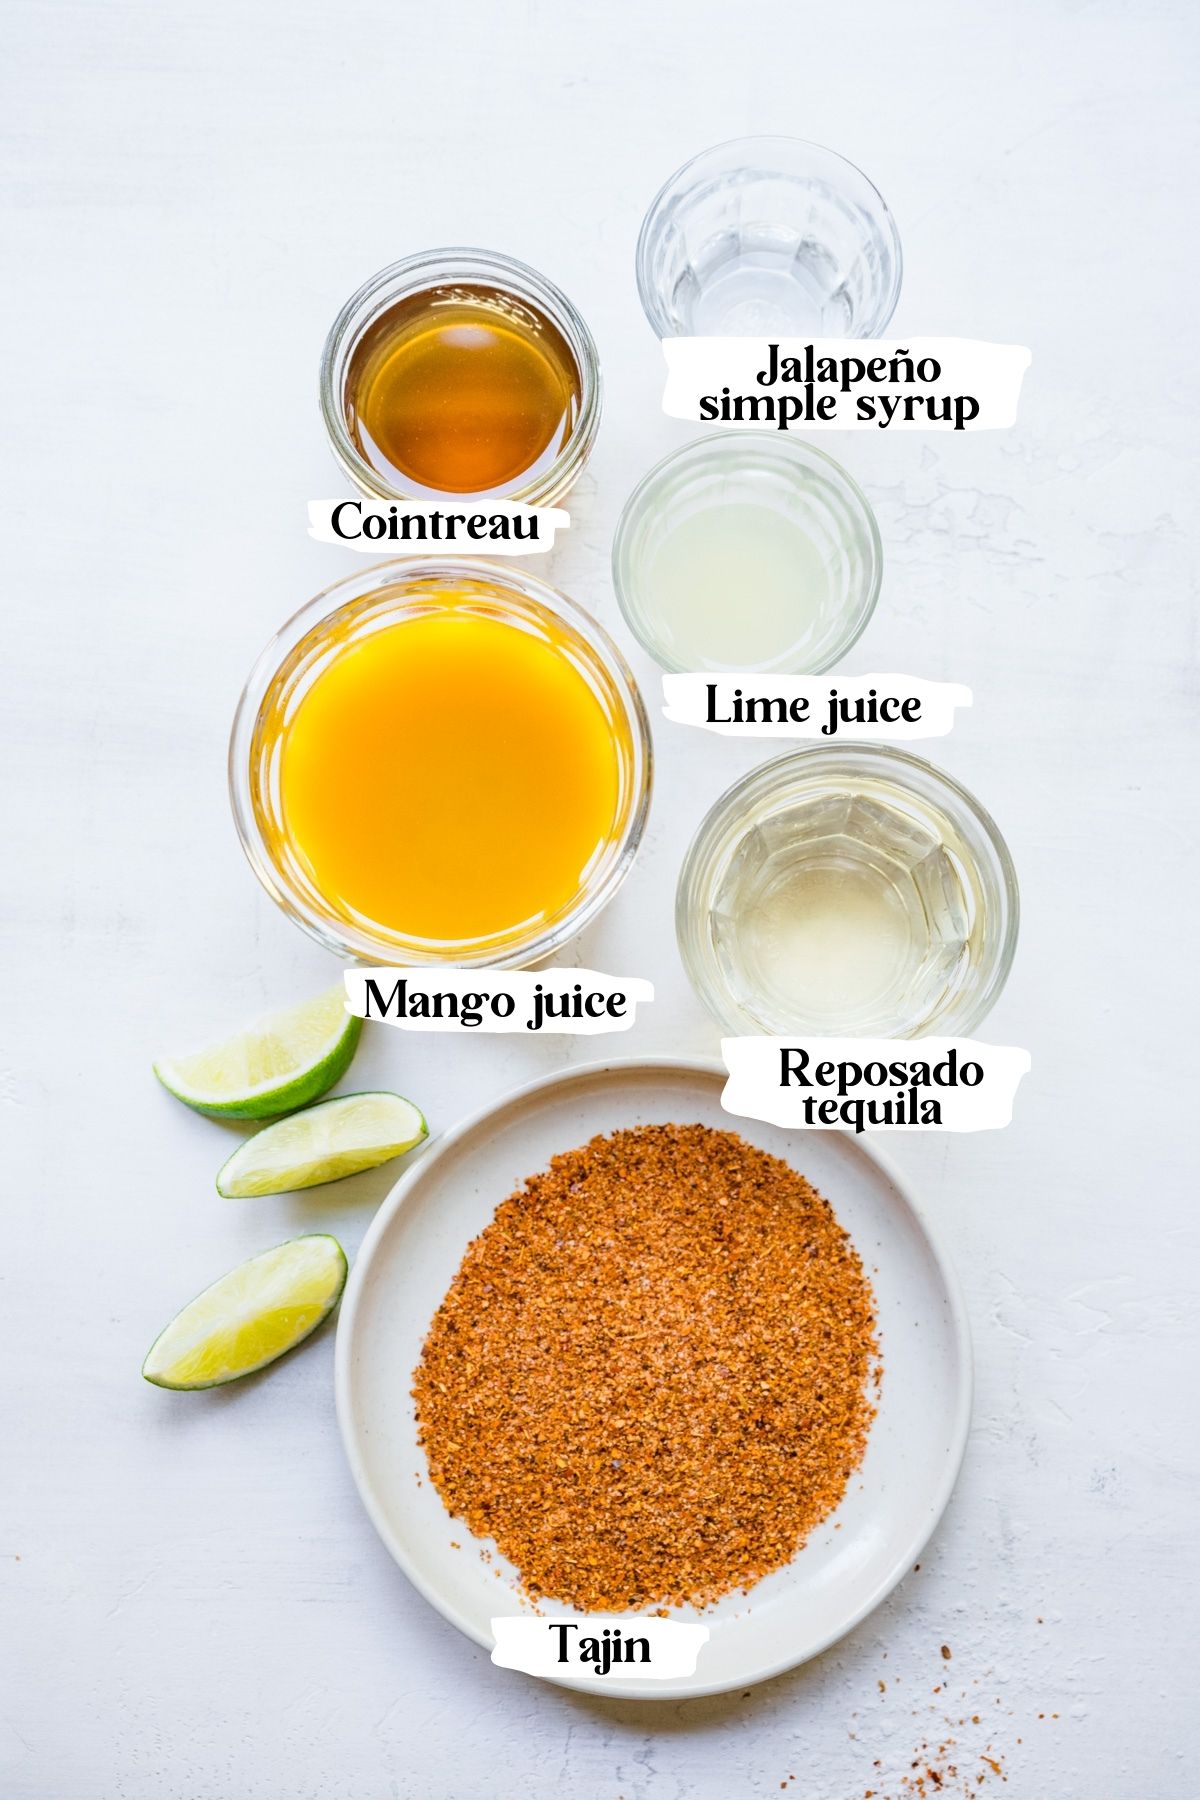 Overhead of mango margarita ingredients including mango juice, reposado tequila and lime juice.